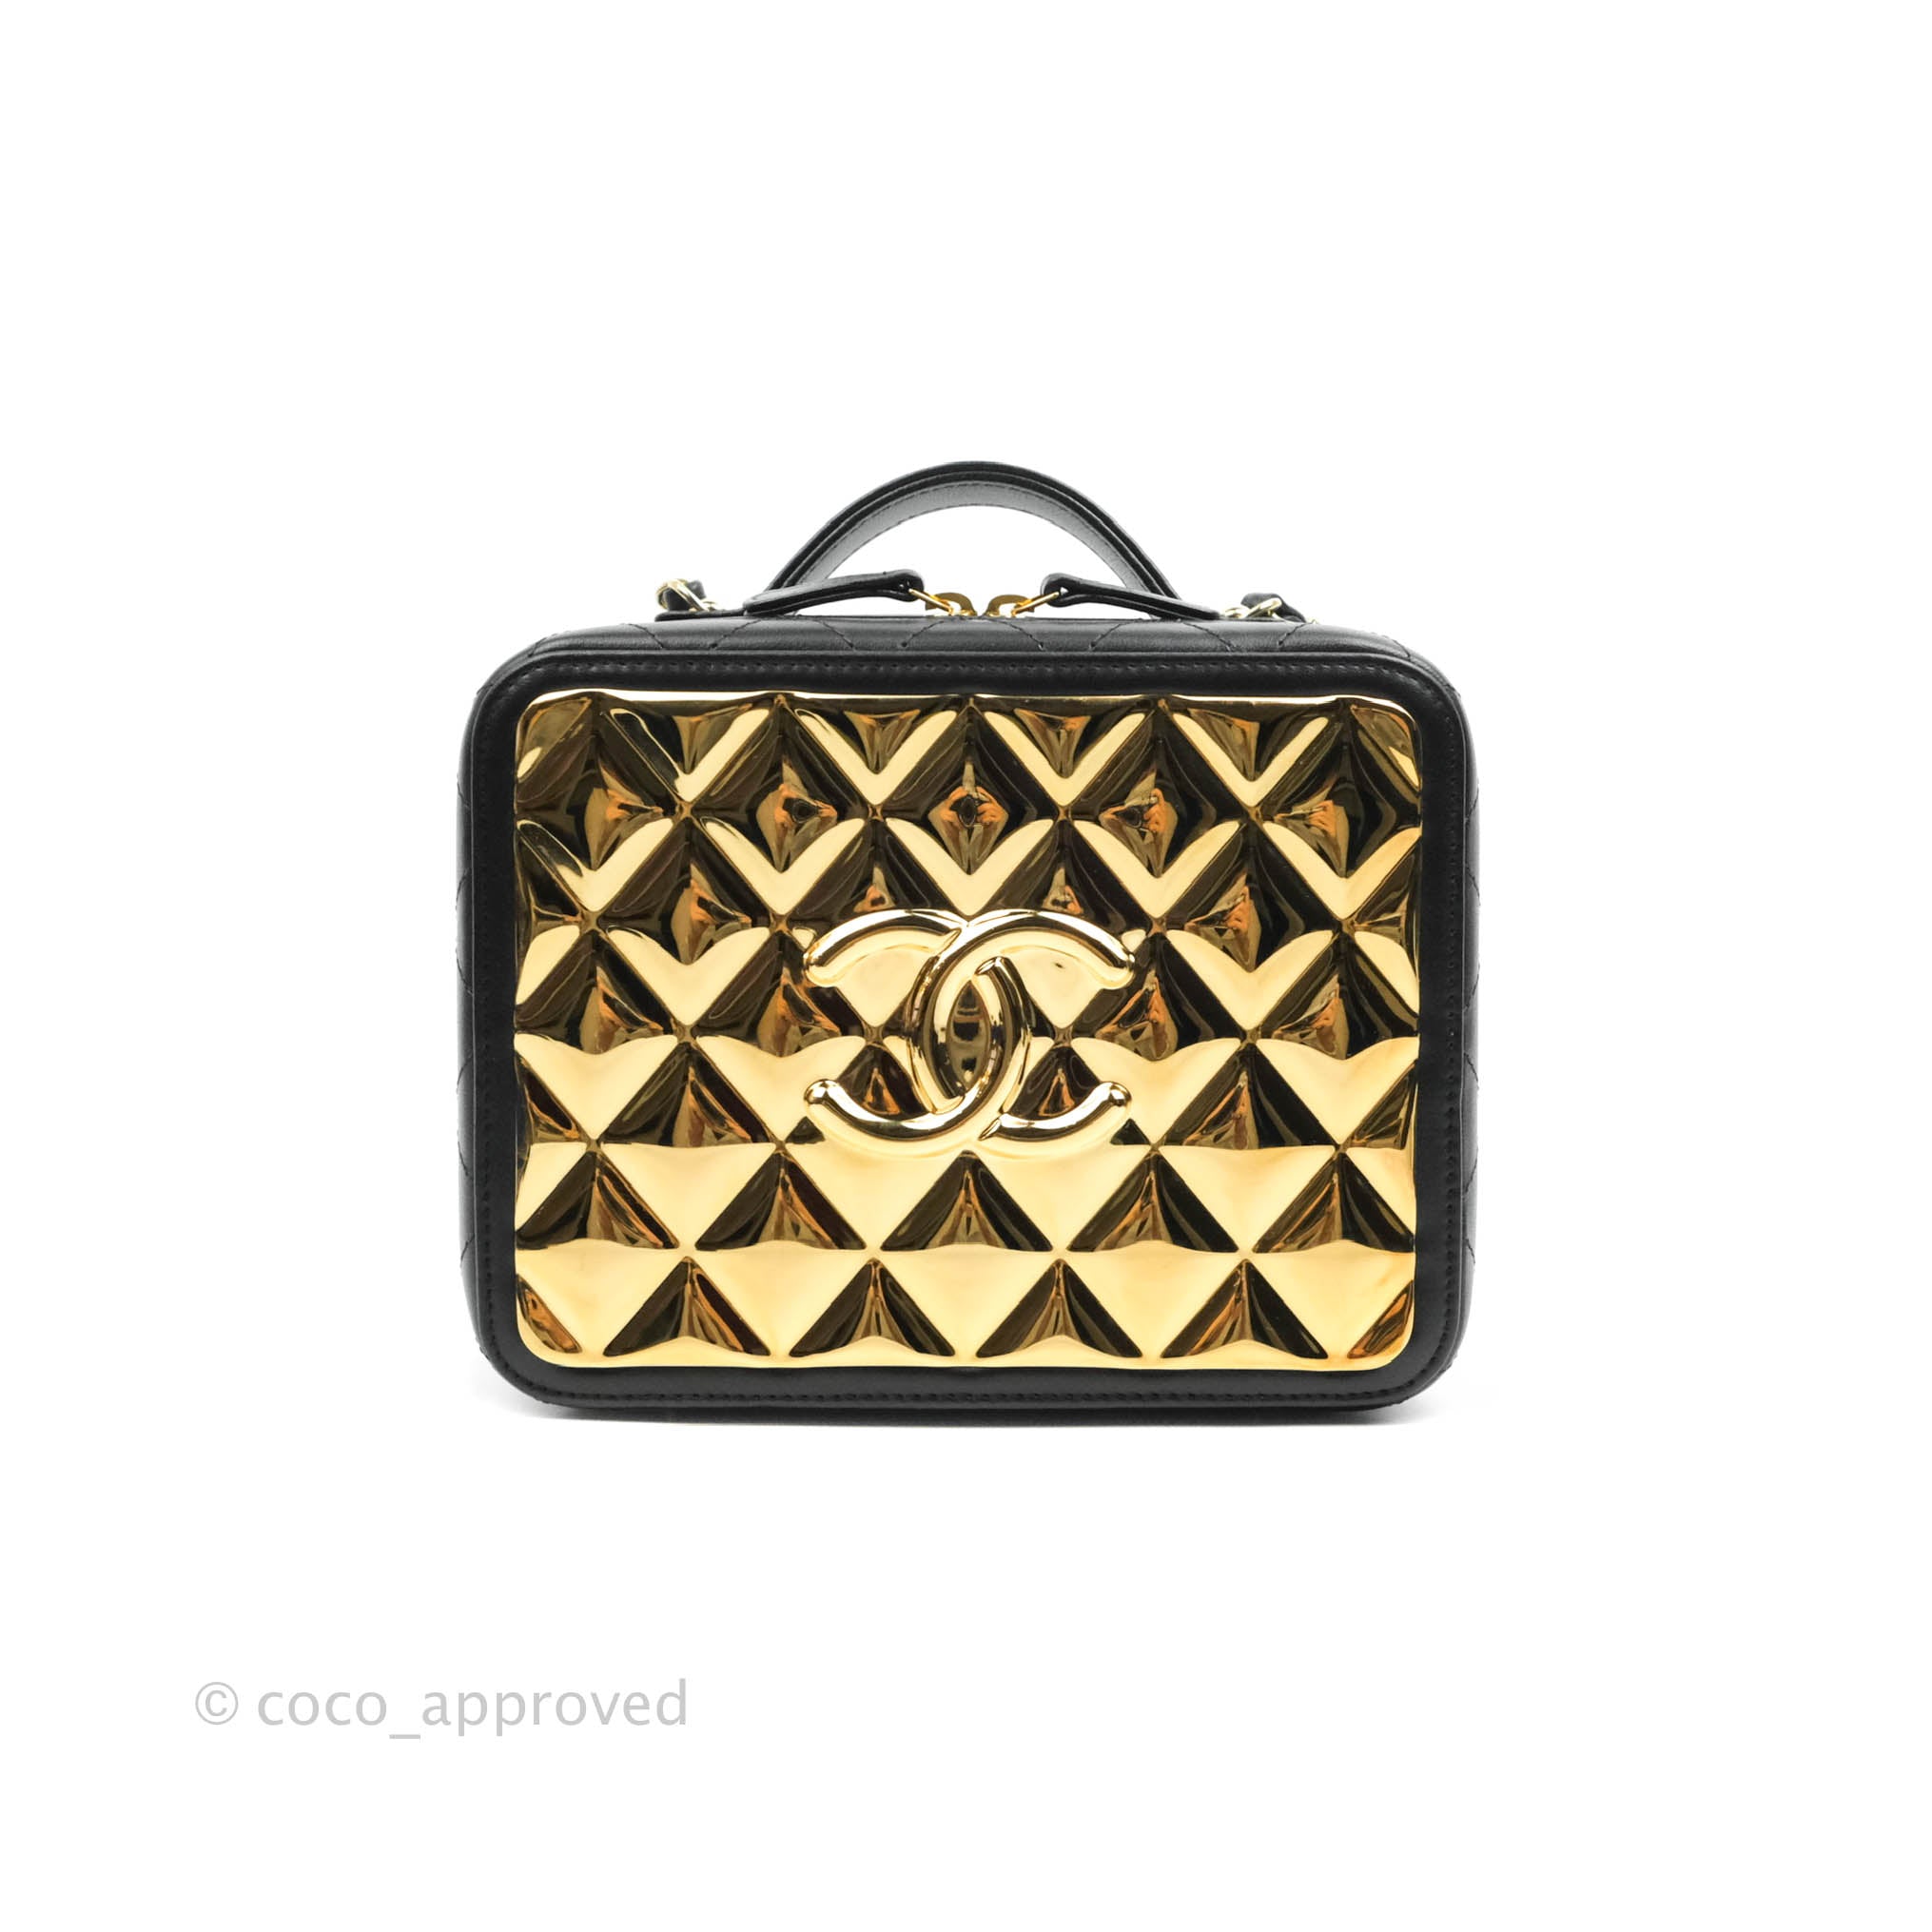 Chanel Vintage Black Quilted Lambskin Large Vanity Box Bag Gold